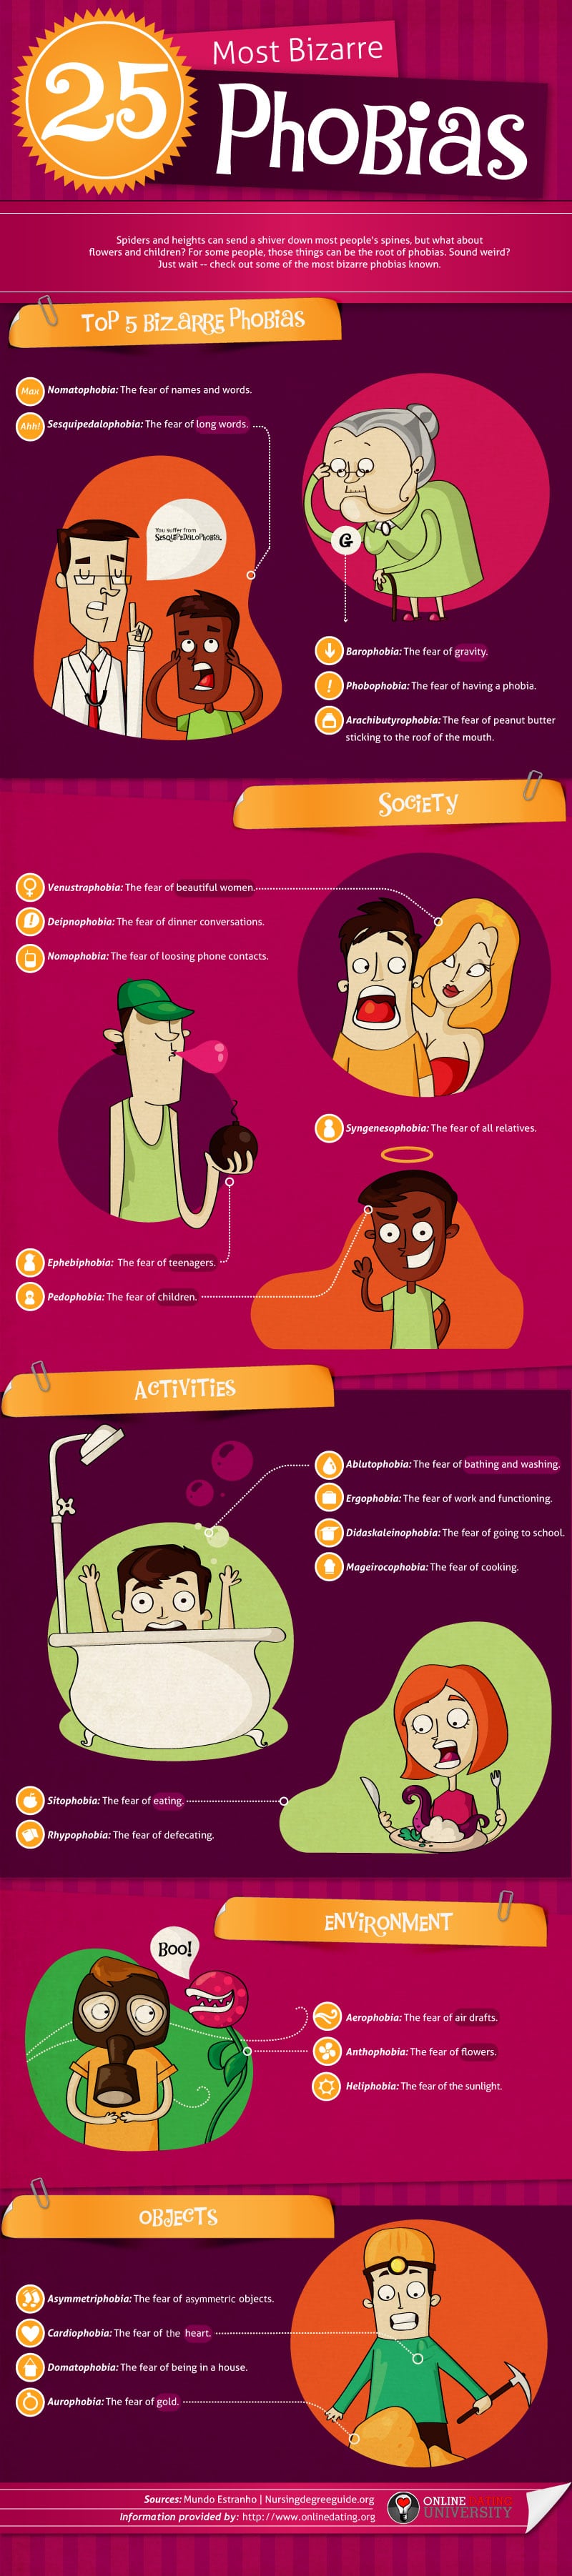 25 Most Bizarre Phobias [Infographic]